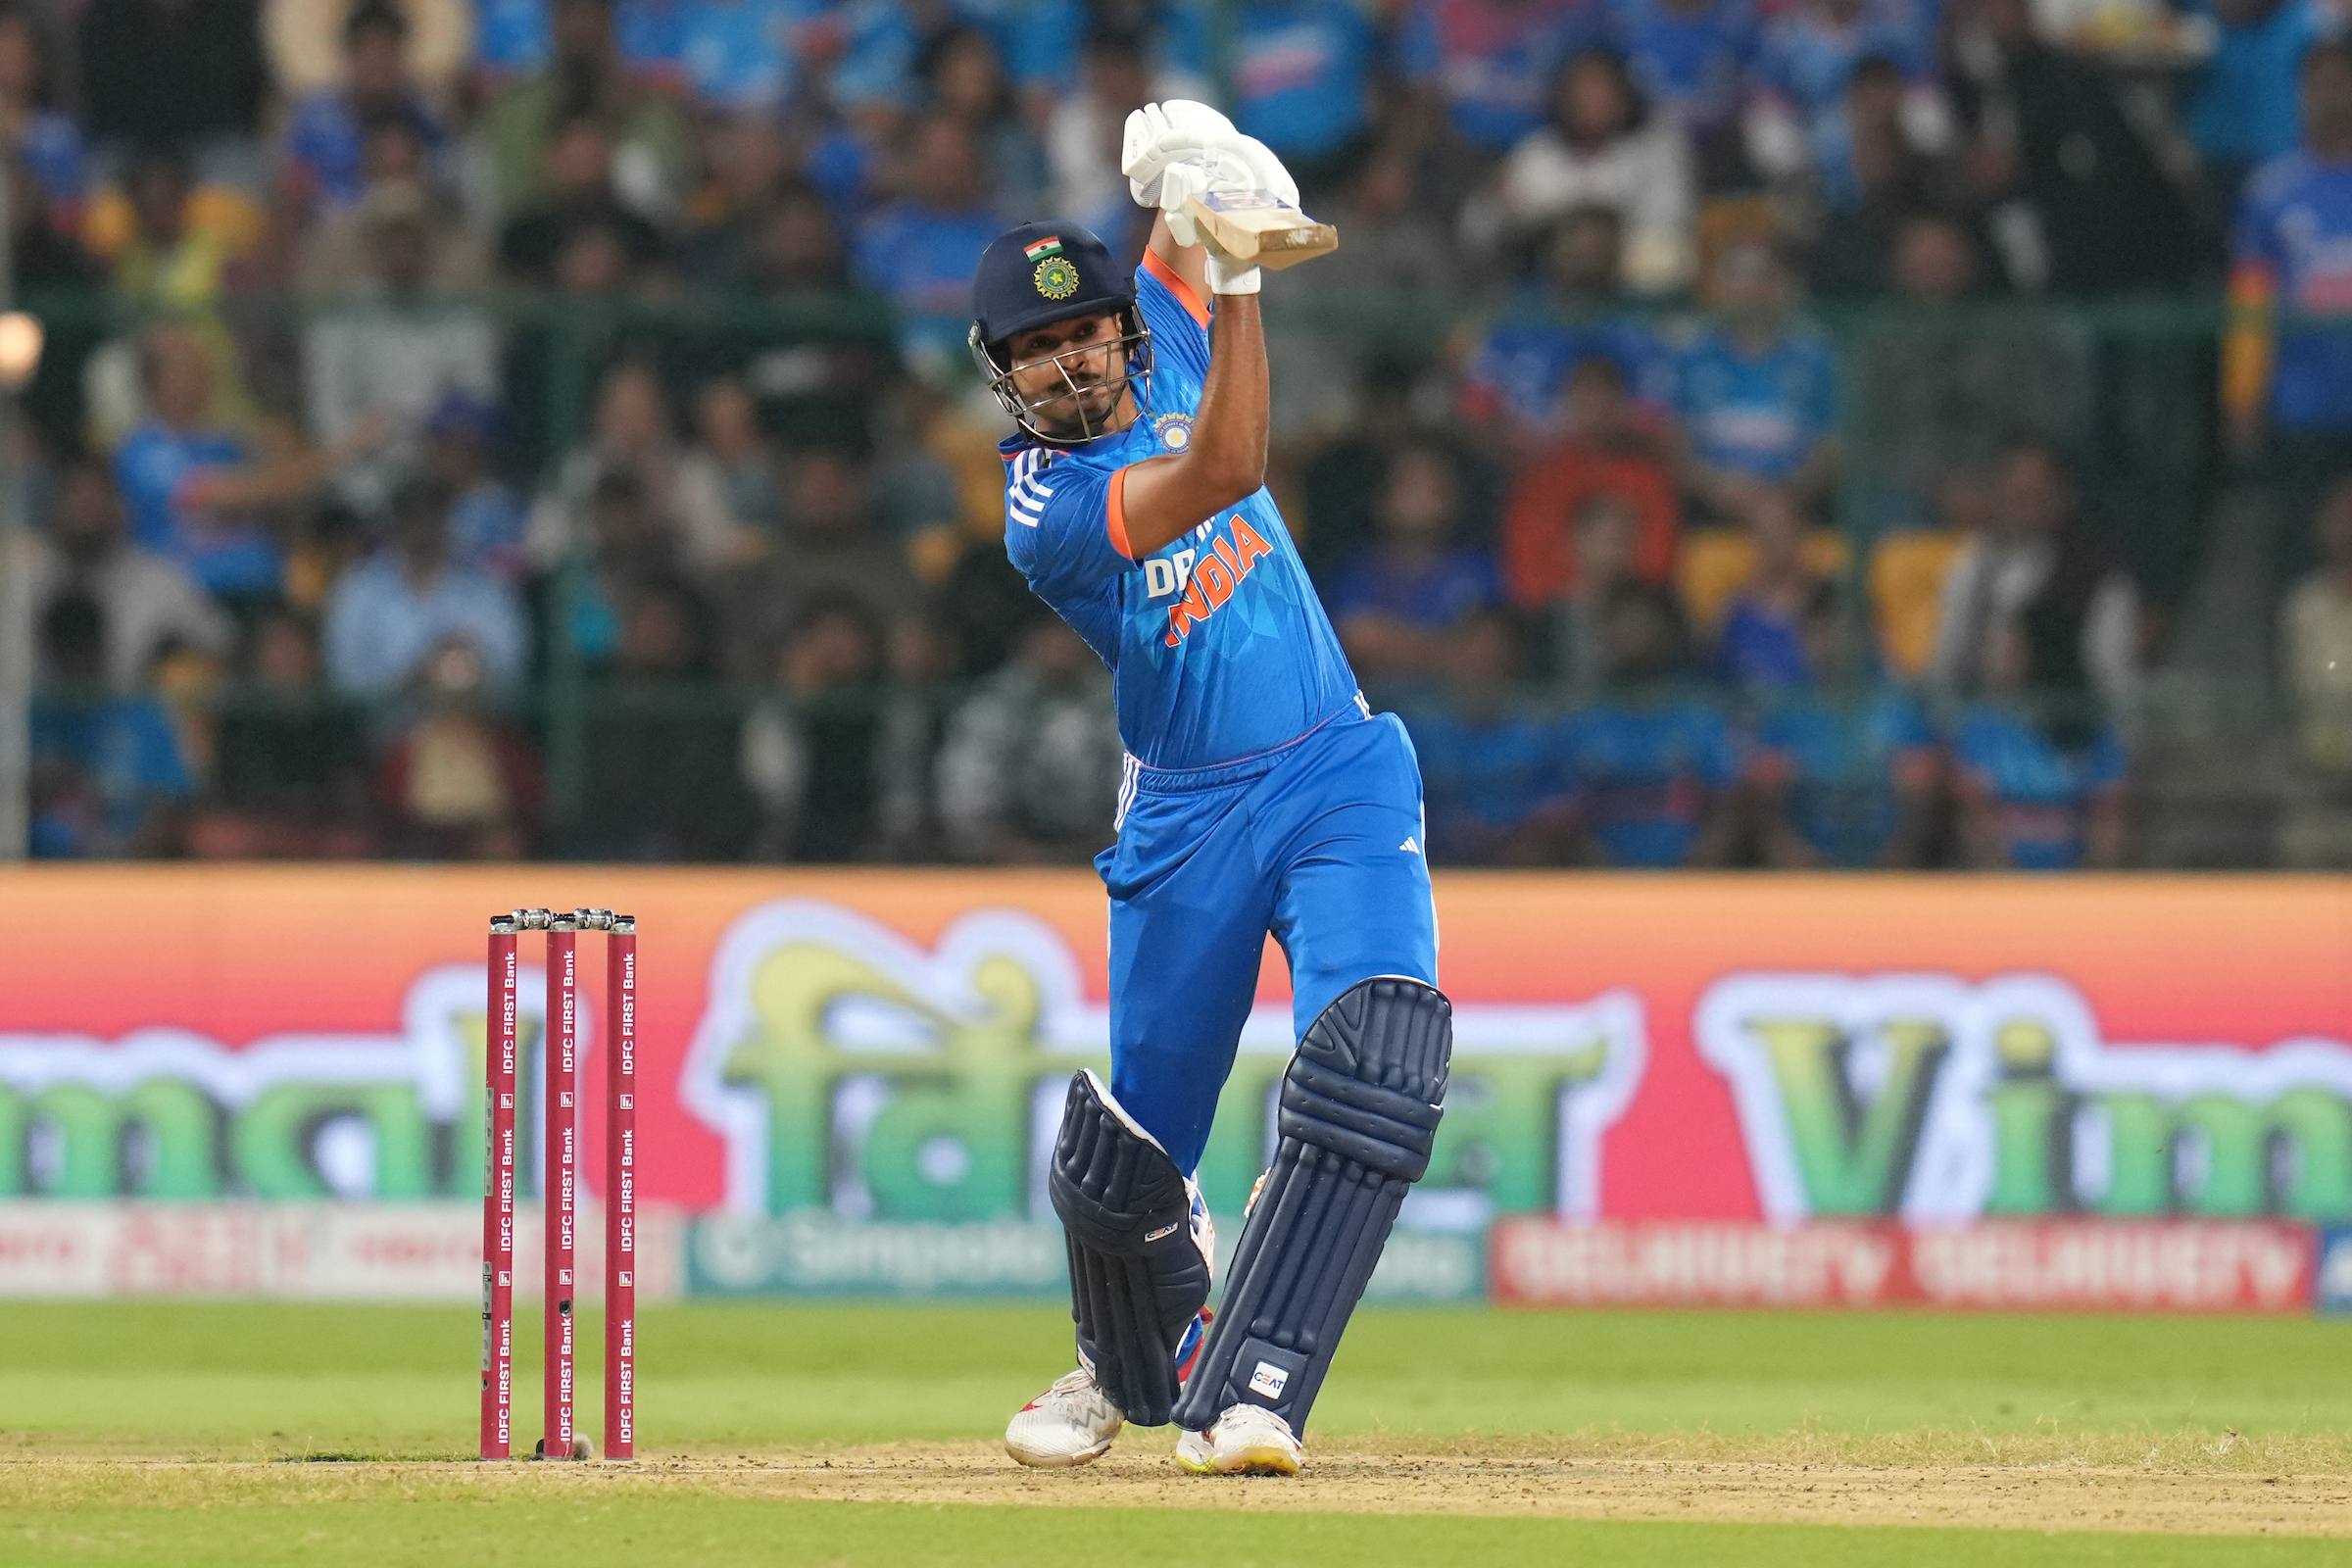 IND vs AUS: [WATCH] Shreyas Iyer Slams A Glorious Six During Fifth T20I Against Australia